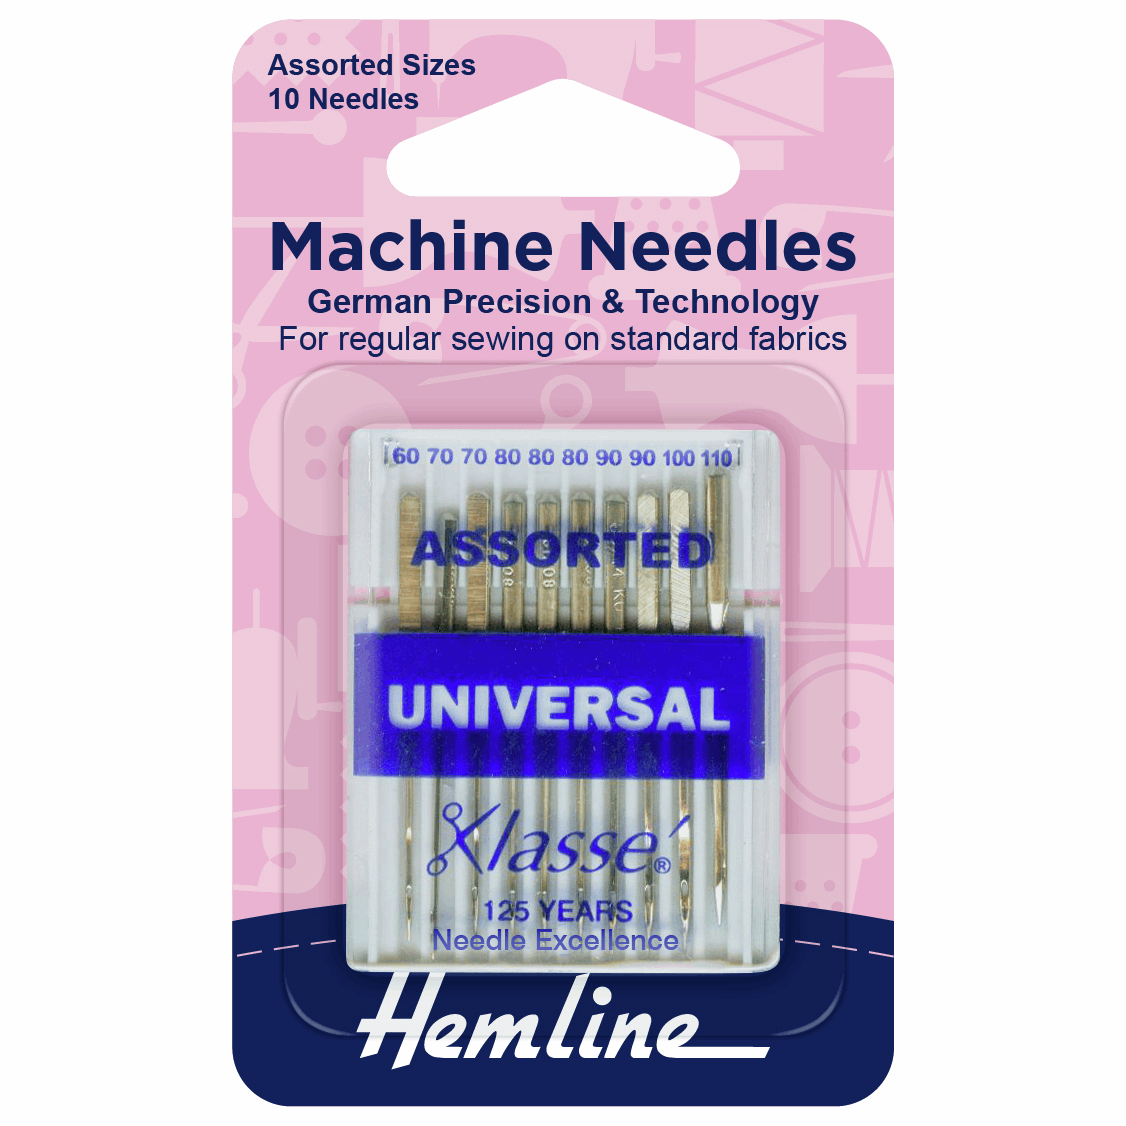 Klasse Sewing Machine Needles: Universal: Assorted: 10 Needles